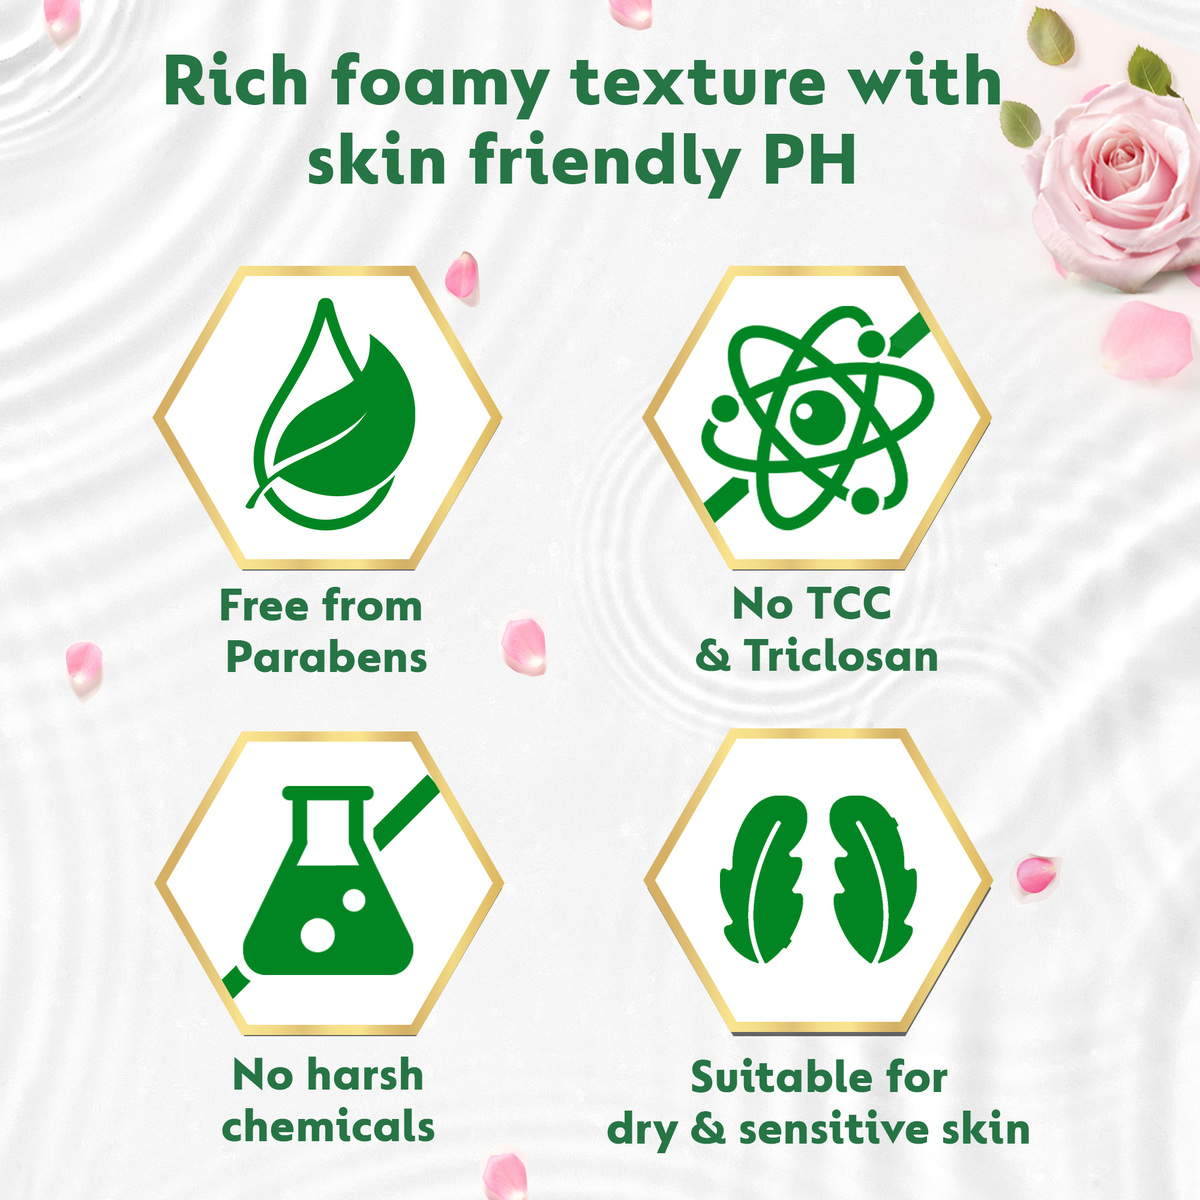 Dettol Activ-Botany Antibacterial Liquid Handwash, Rosewater & Hibiscus Fragrance, 100% Plant-Derived Ingredients 200 ml